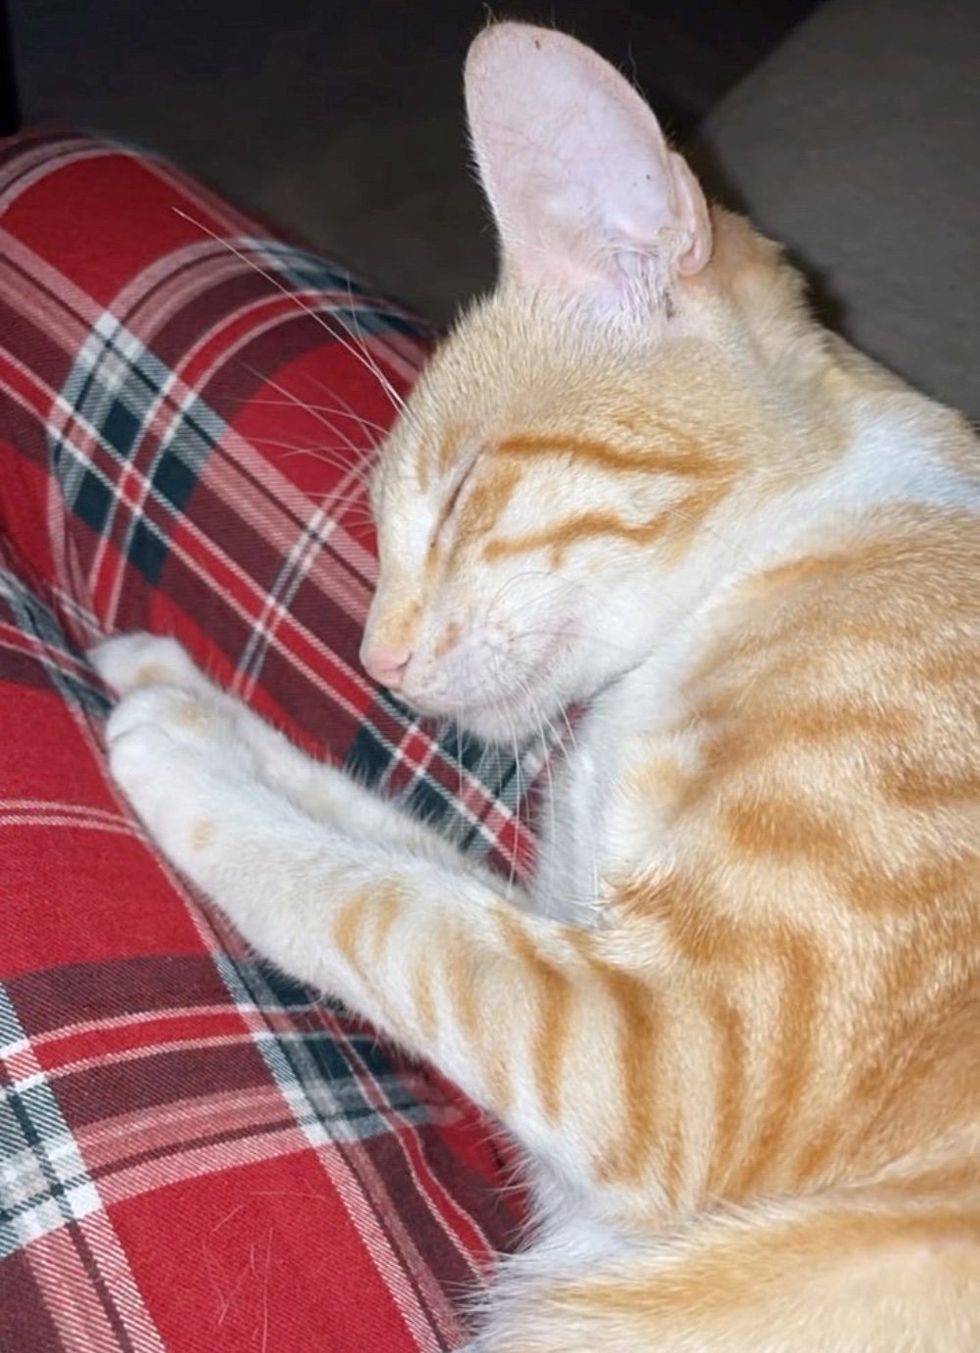 snuggly cat ginger tabby